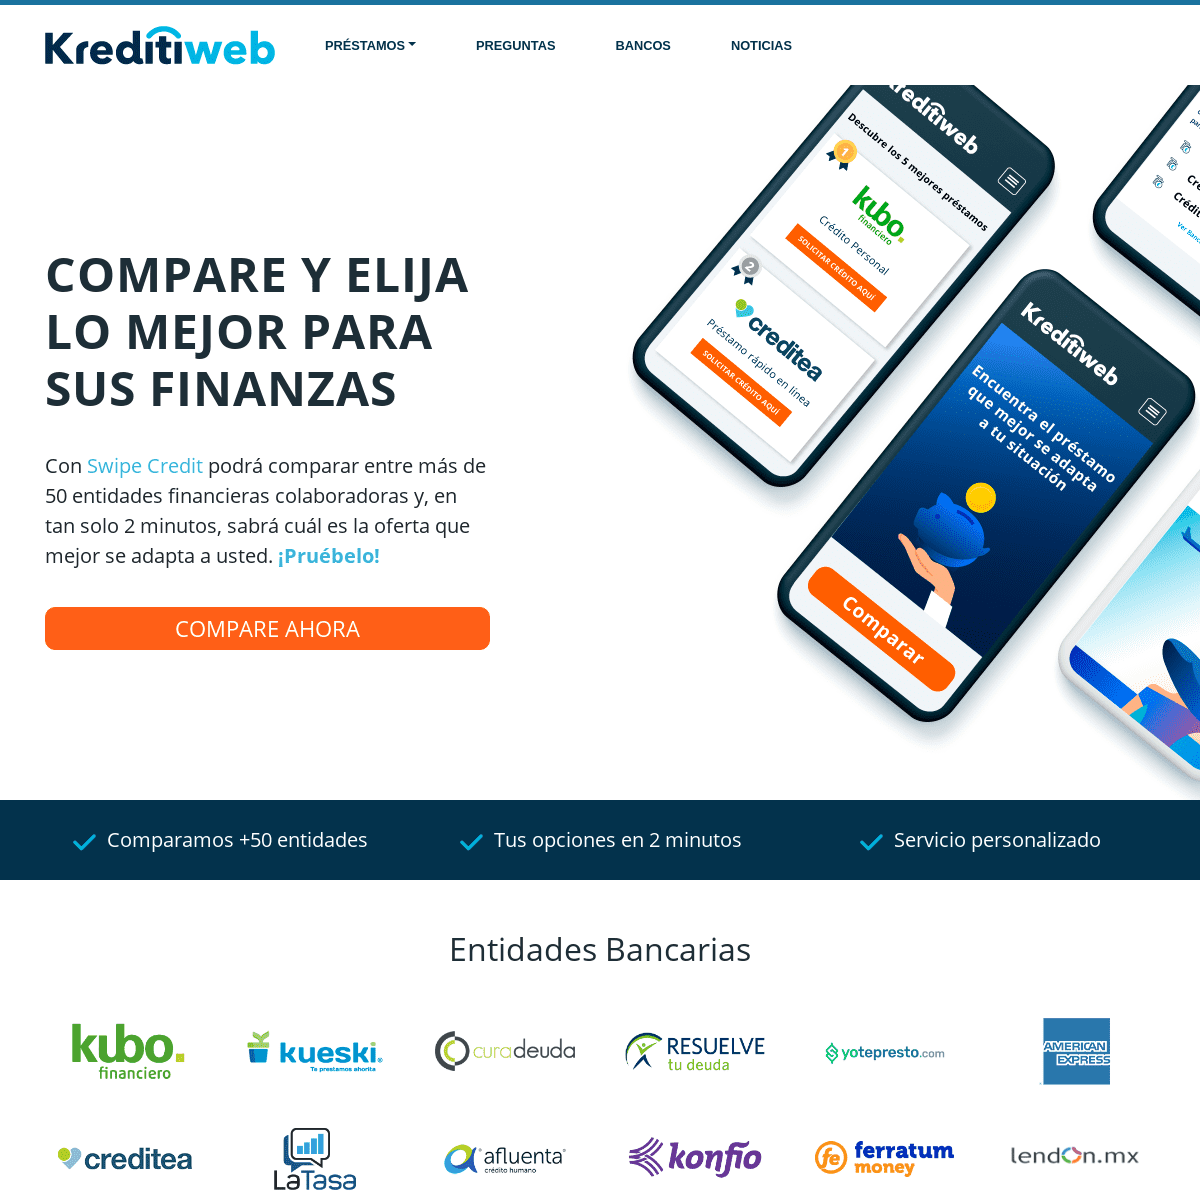 A complete backup of kreditiweb.mx